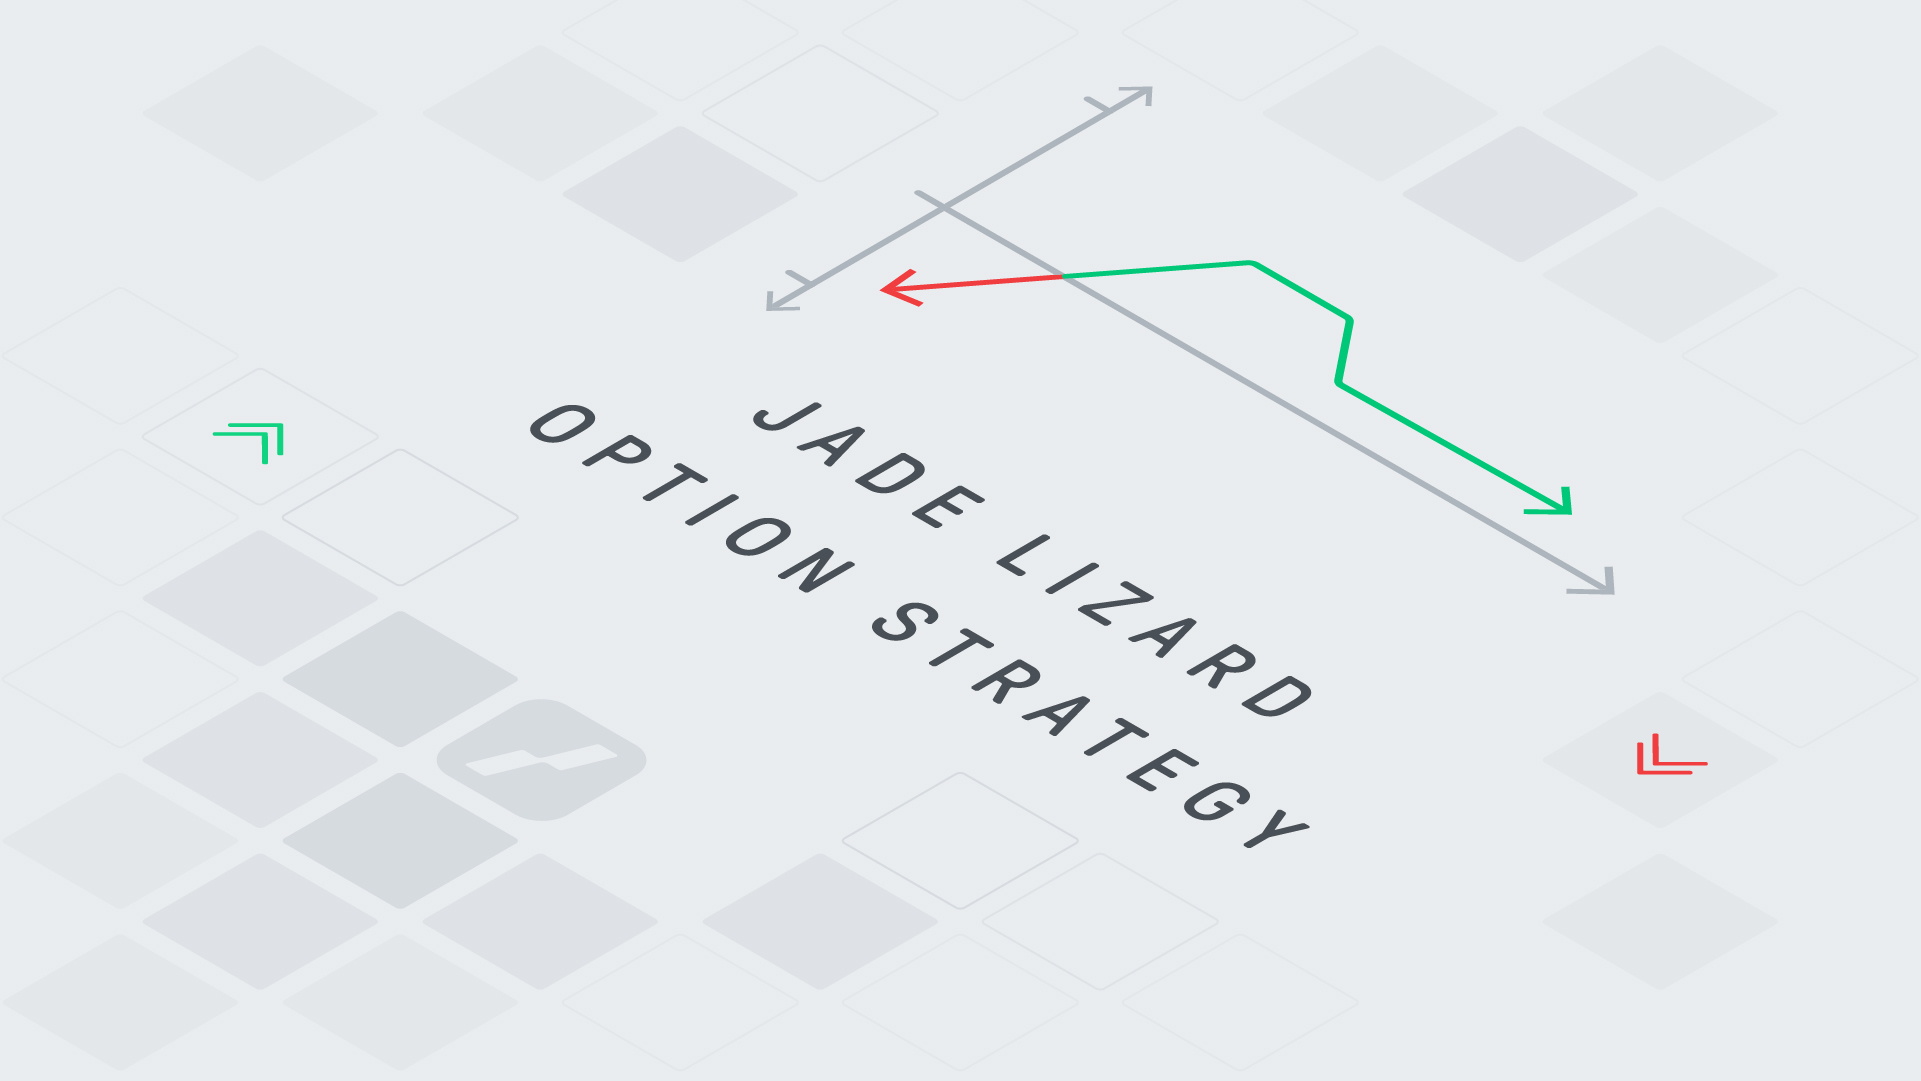 jade lizard option strategy - jade lizard optiestrategie